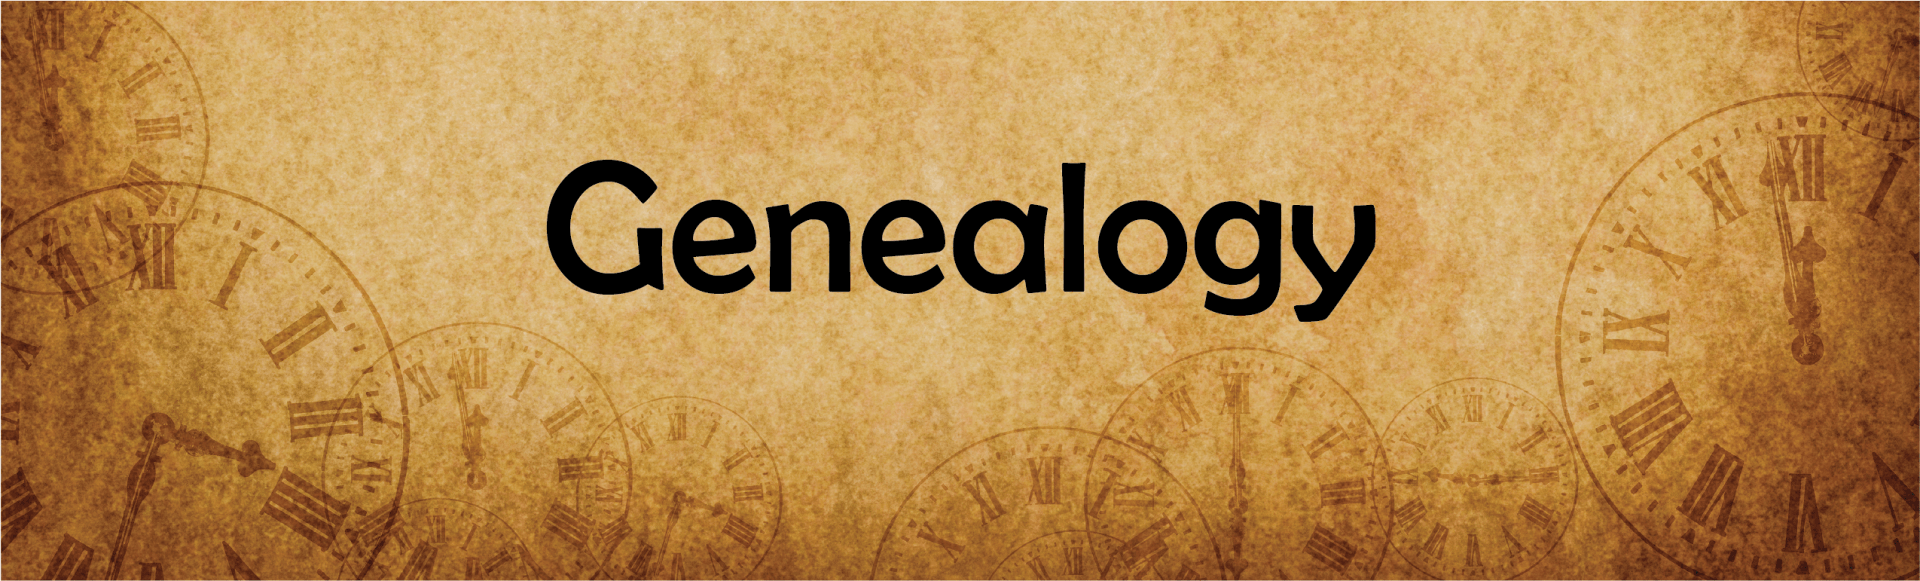 Resource Sheet for Beginning Genealogists